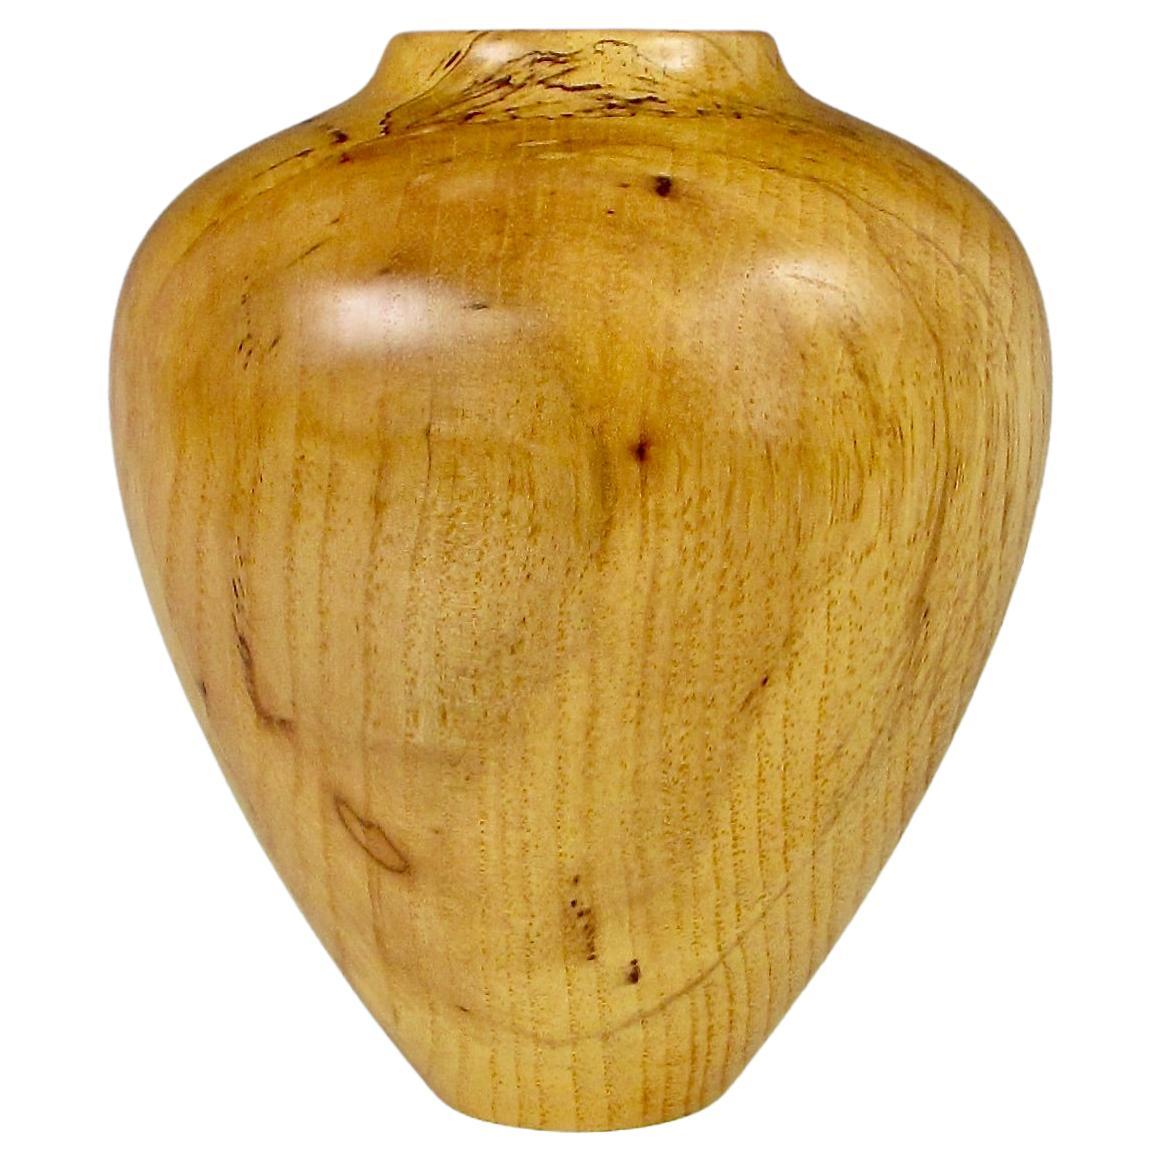 American Craftsman Moulthrop era spalted pecan turned wood vessel by Alan Raelston   For Sale